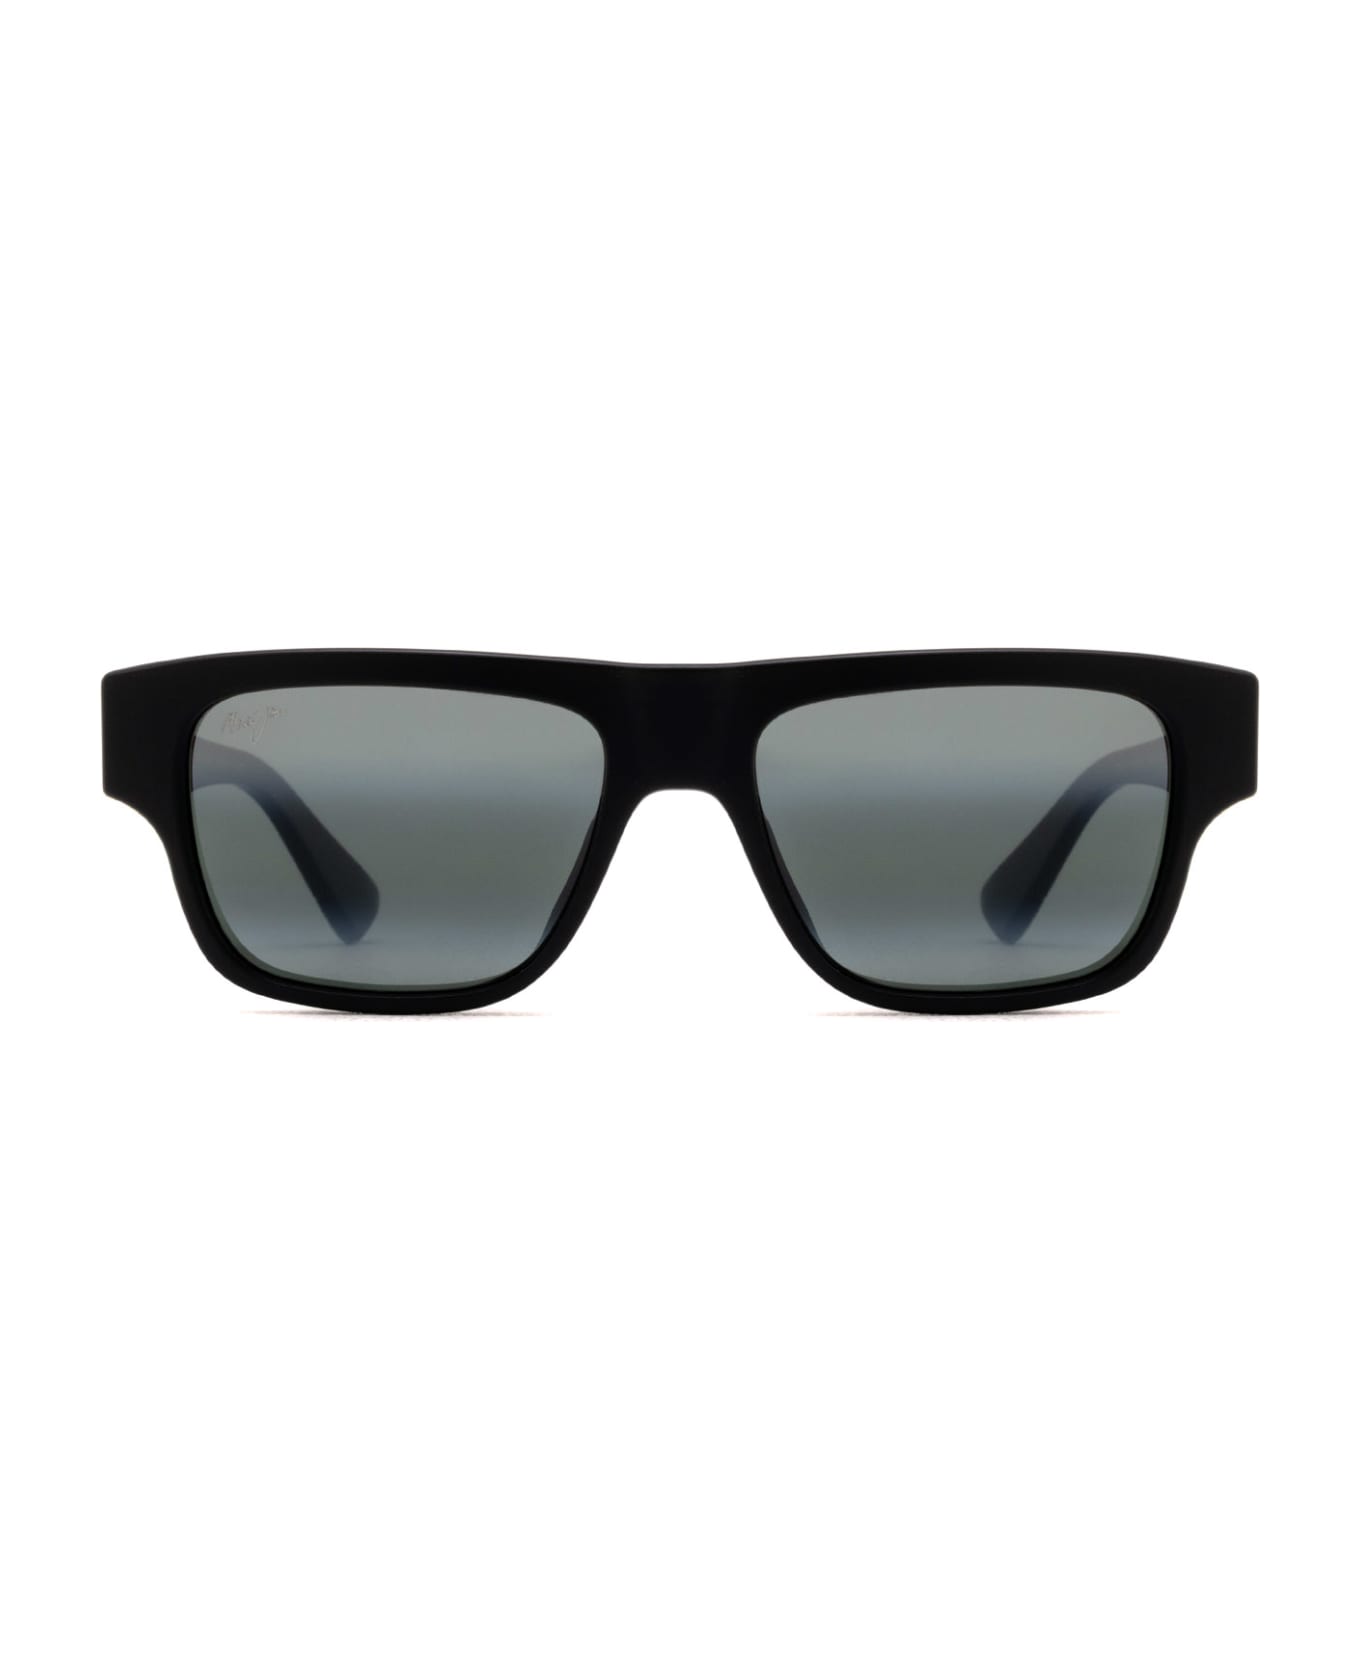 Maui Jim Mj638 Matte Black Sunglasses - Matte Black サングラス